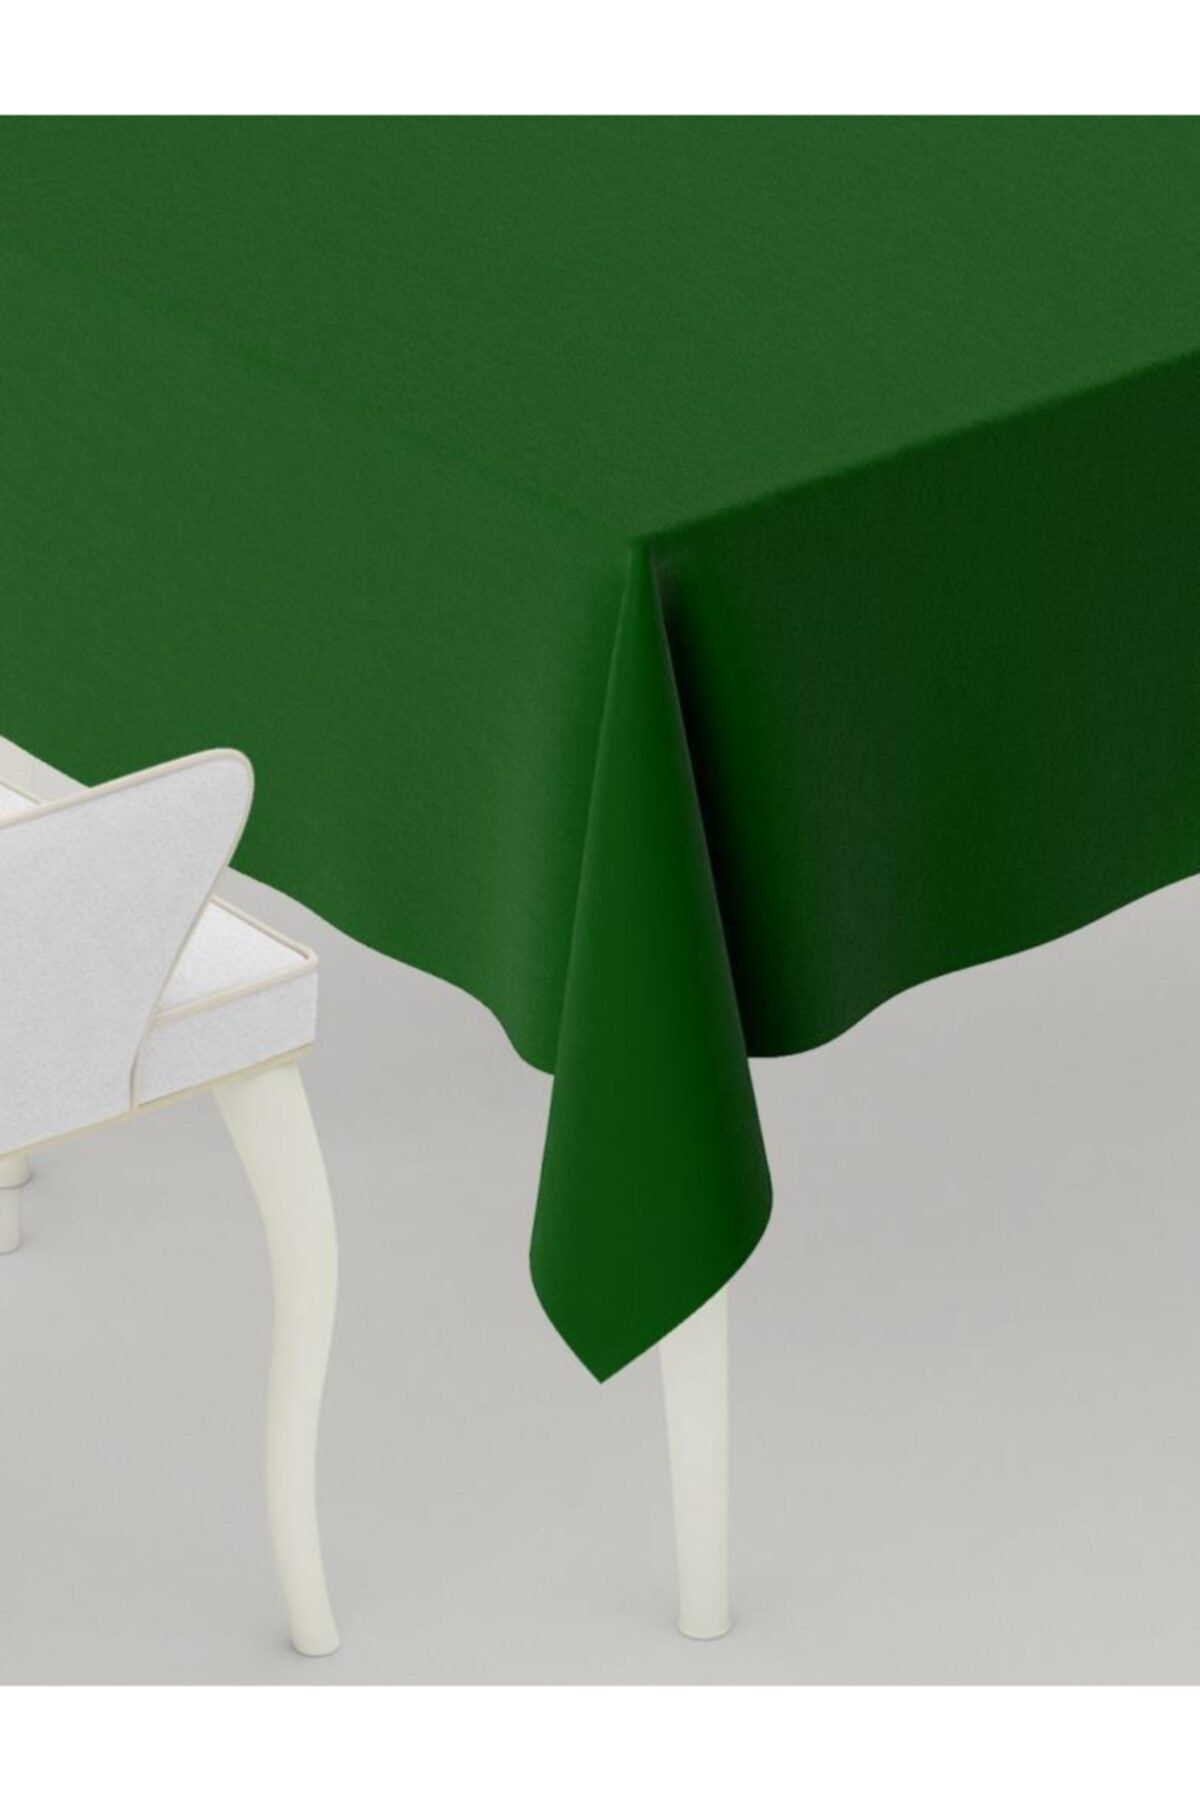 LARİS Koyu Yeşil Duck Su Geçirmez Leke Tutmaz Masa Örtüsü 160x220 cm